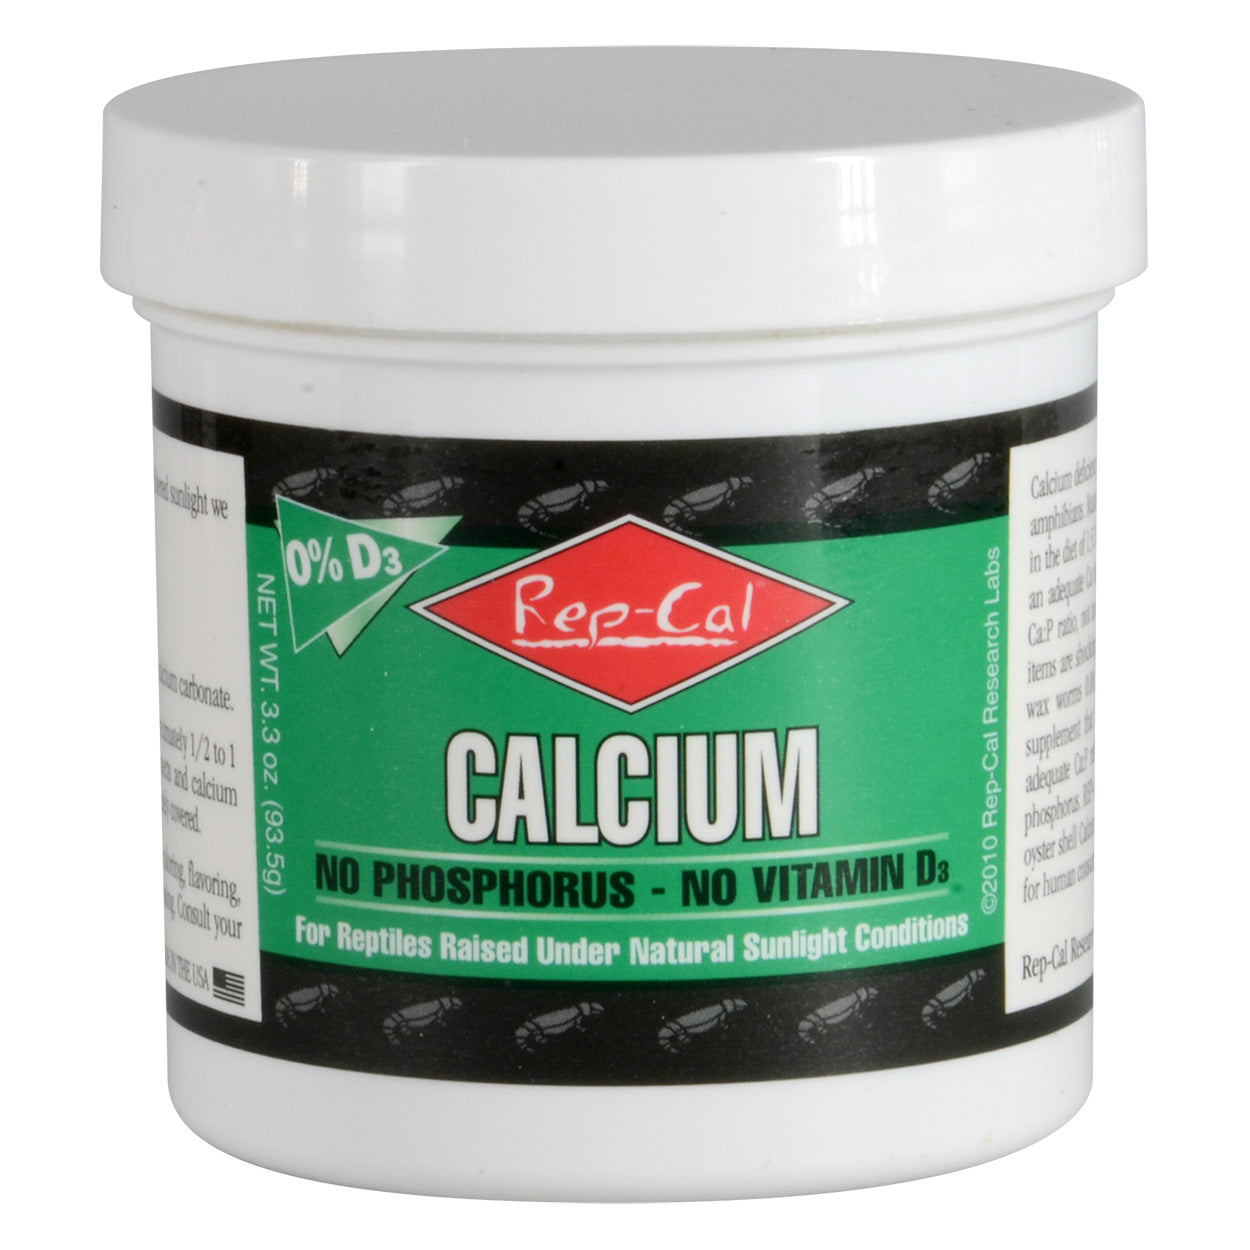 Rep-Cal Calcium without Vitamin D3 - 3.3 oz